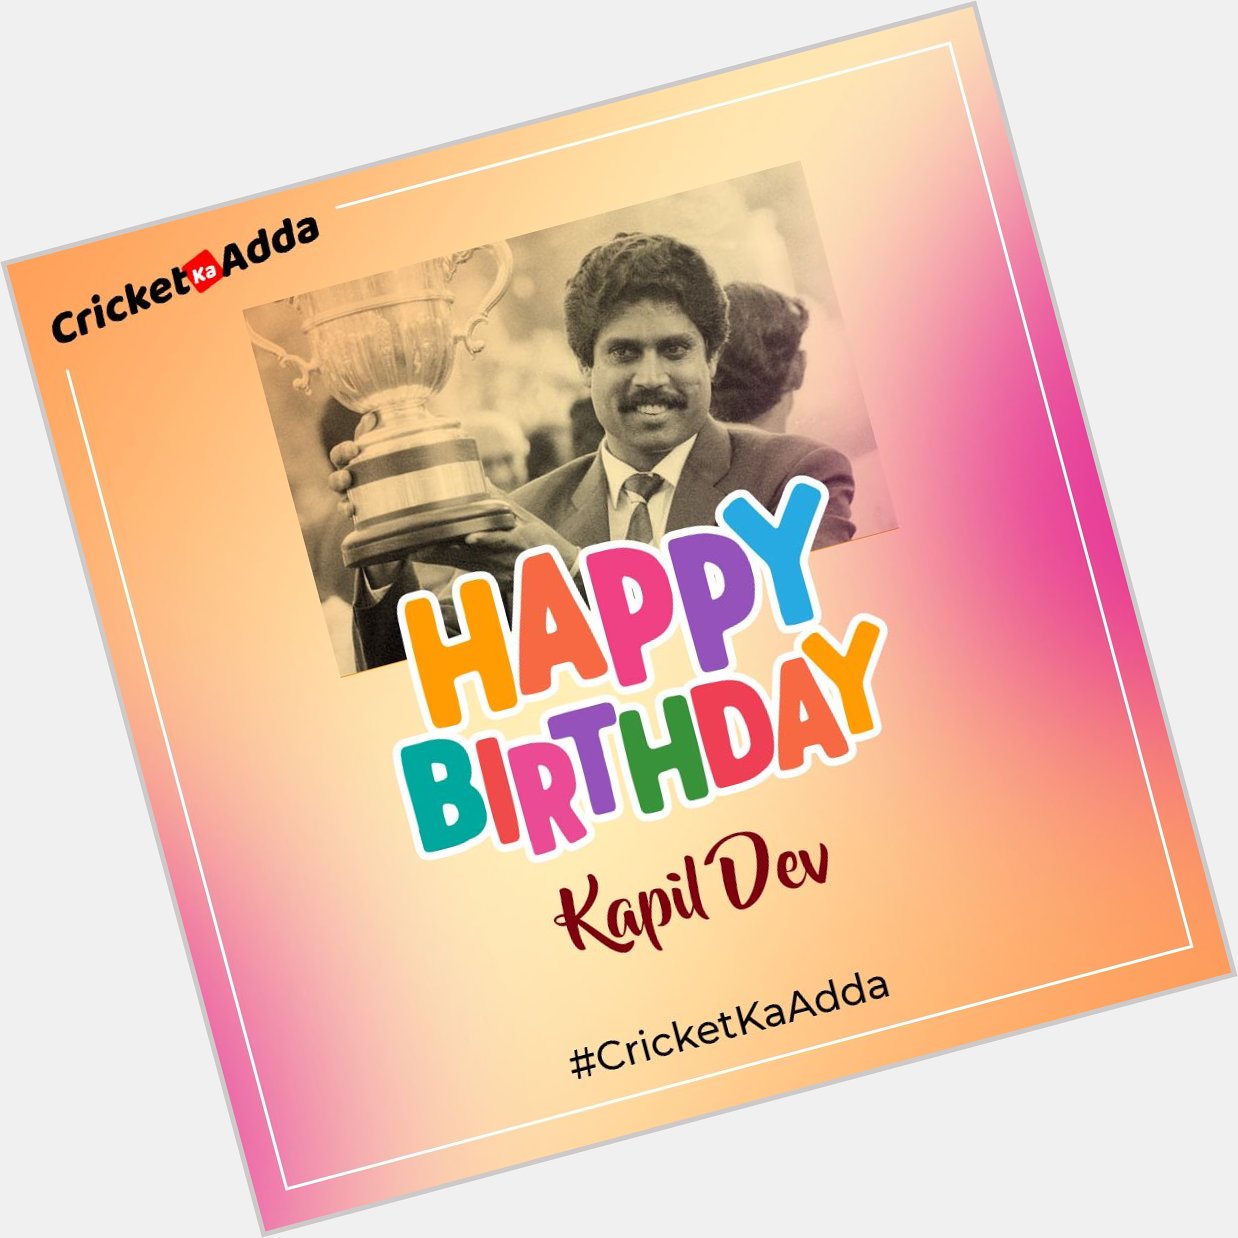 Happy Birthday Kapil Dev! India is proud of you! 